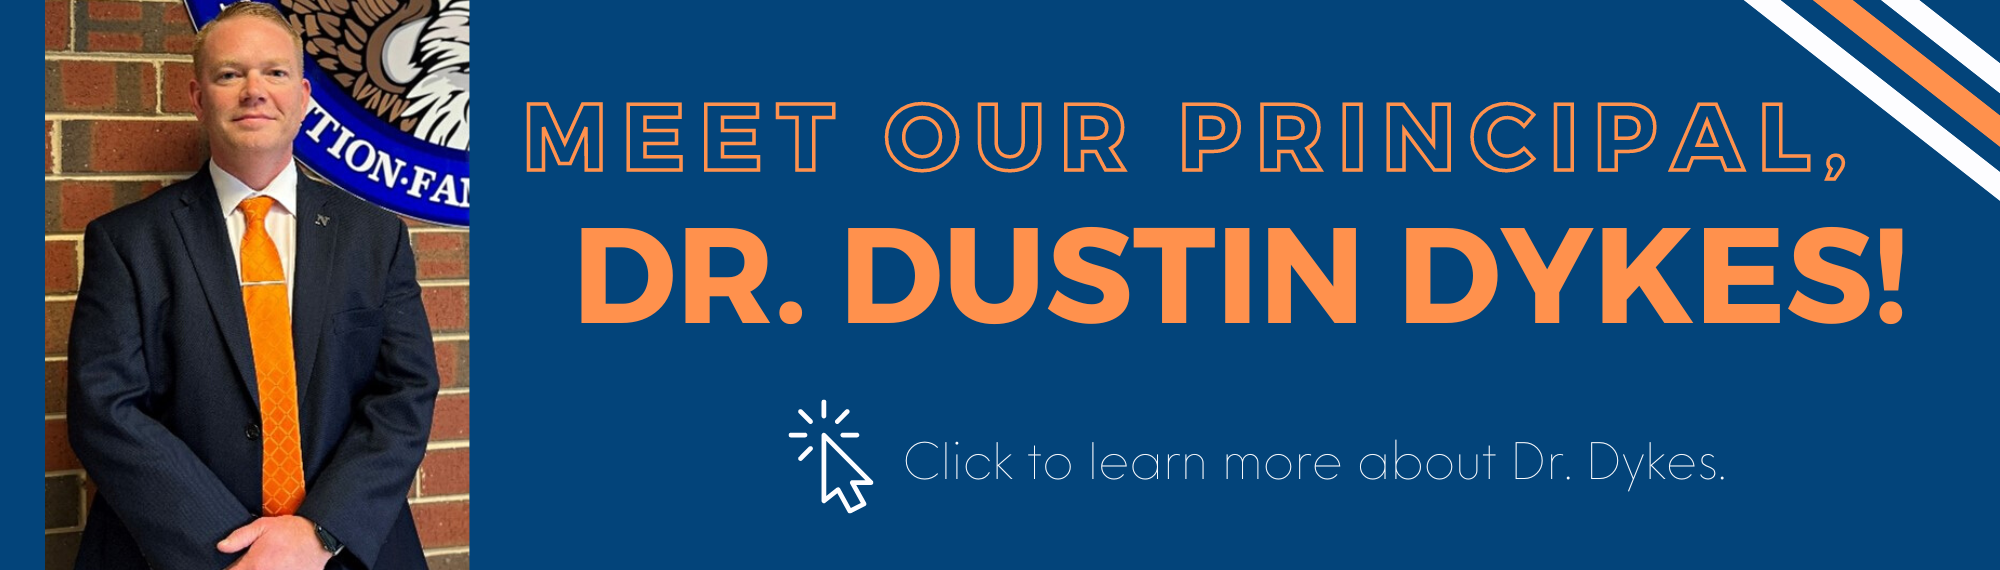 Meet Dr. Dustin Dykes